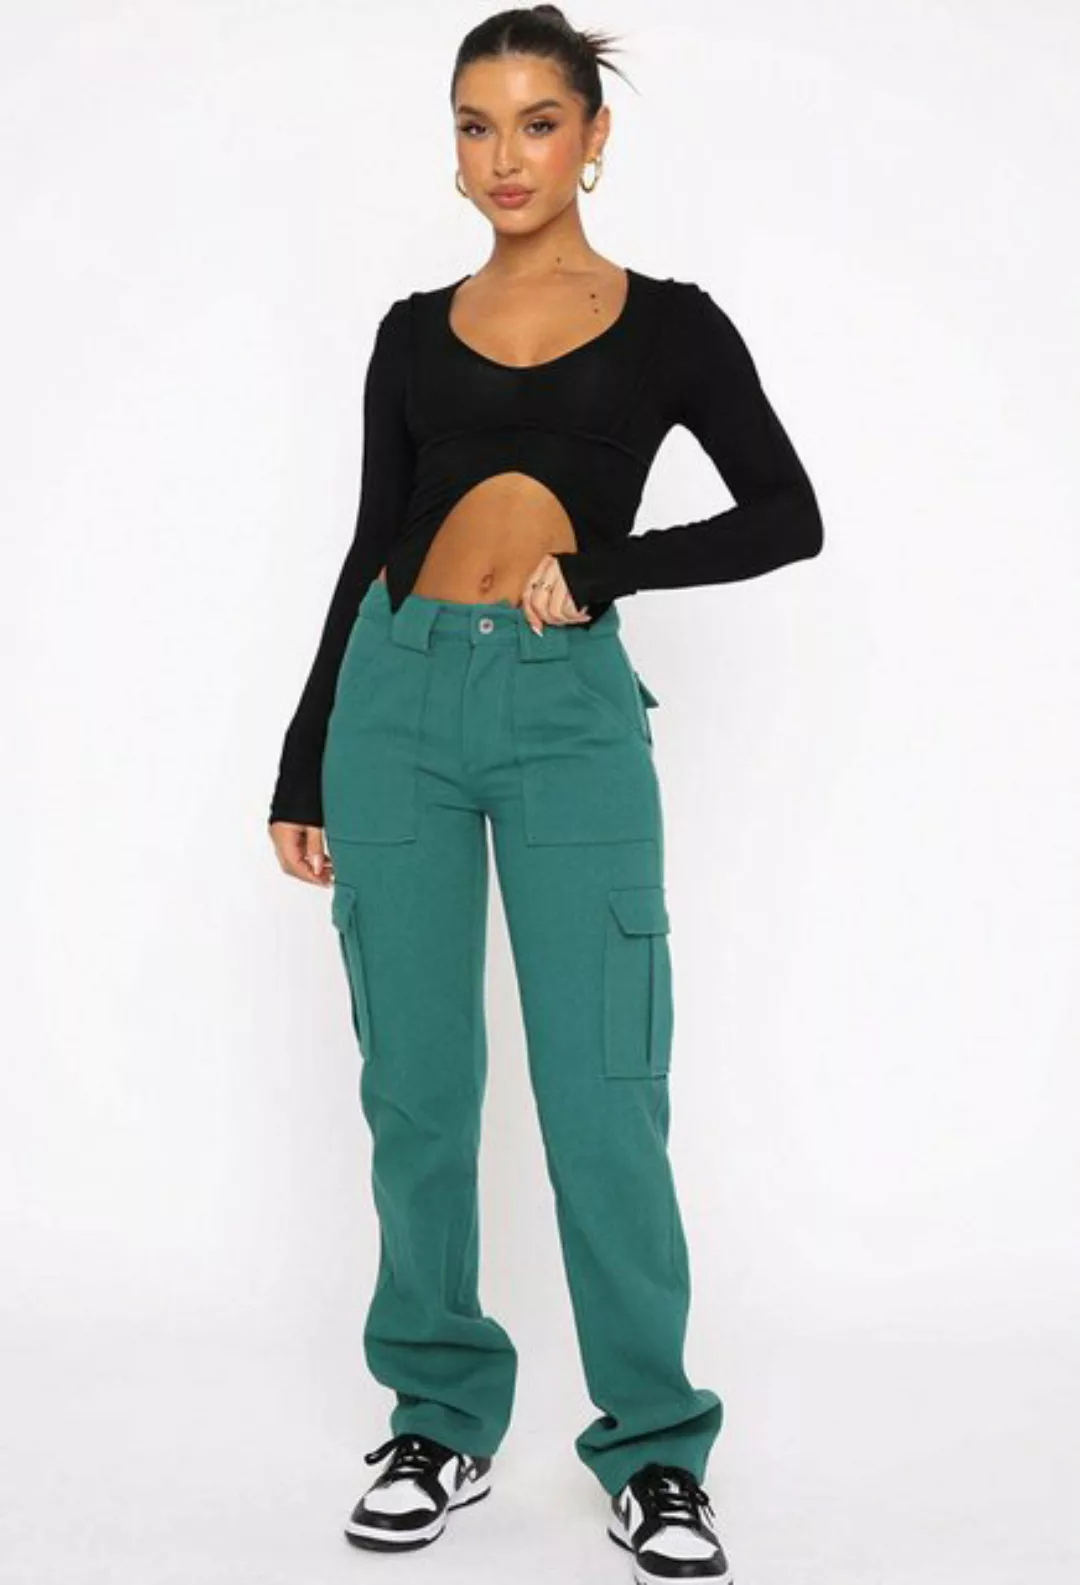 CHENIN Cargojeans Mode jeans, hohe taille skinny Women's overalls - high wa günstig online kaufen